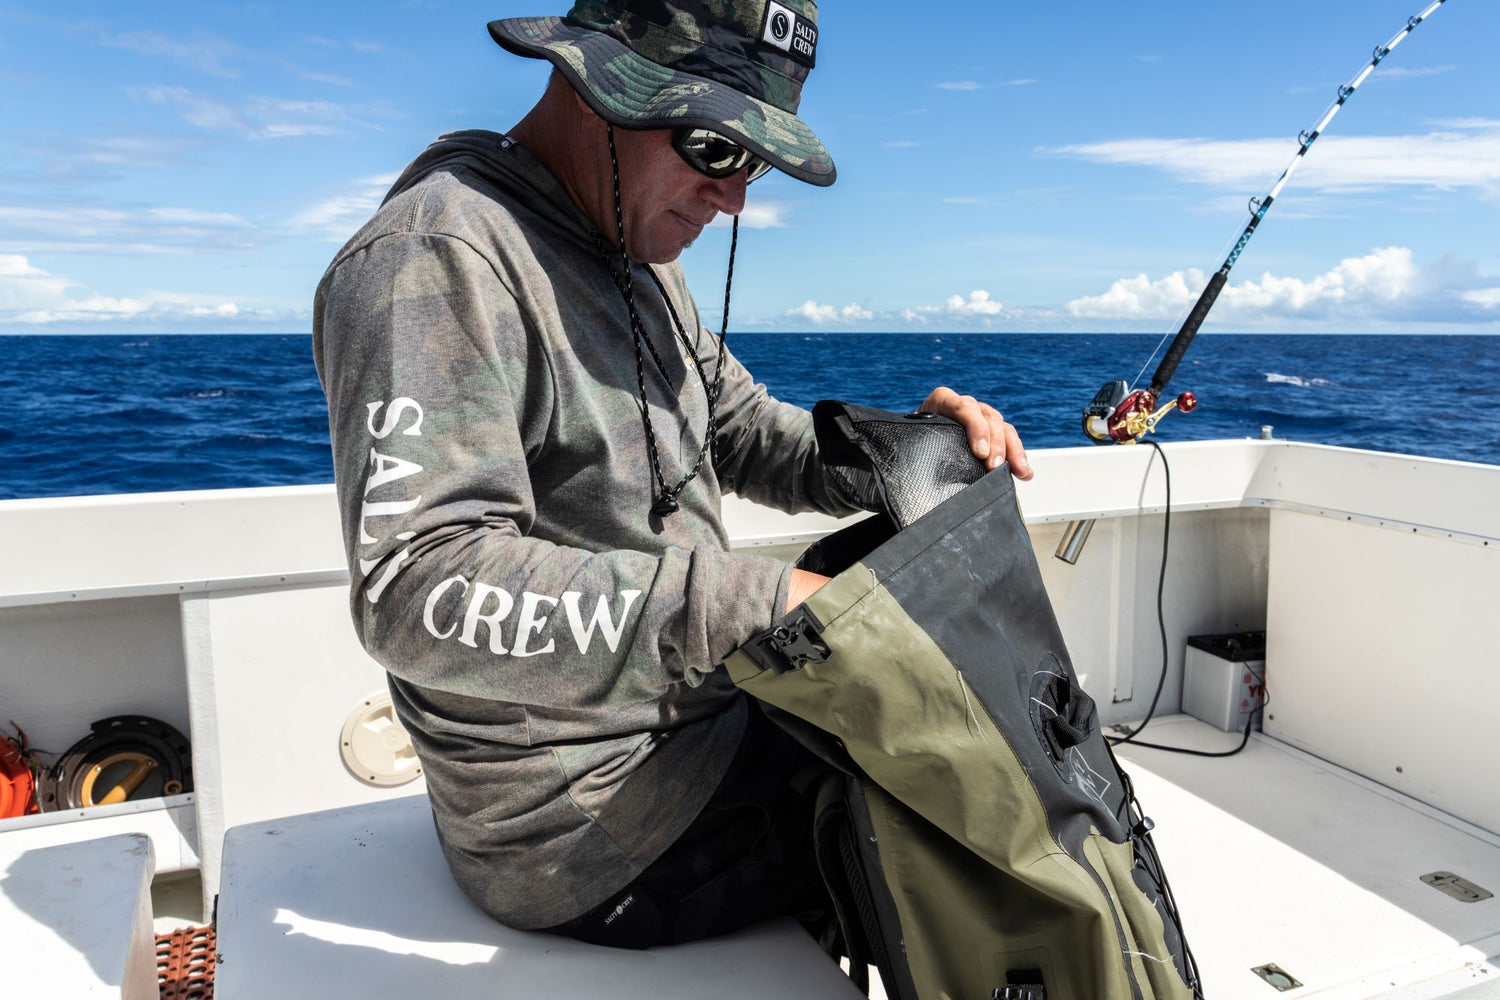 Men's Fishing Clothing  Shop Online - Salty Crew Australia